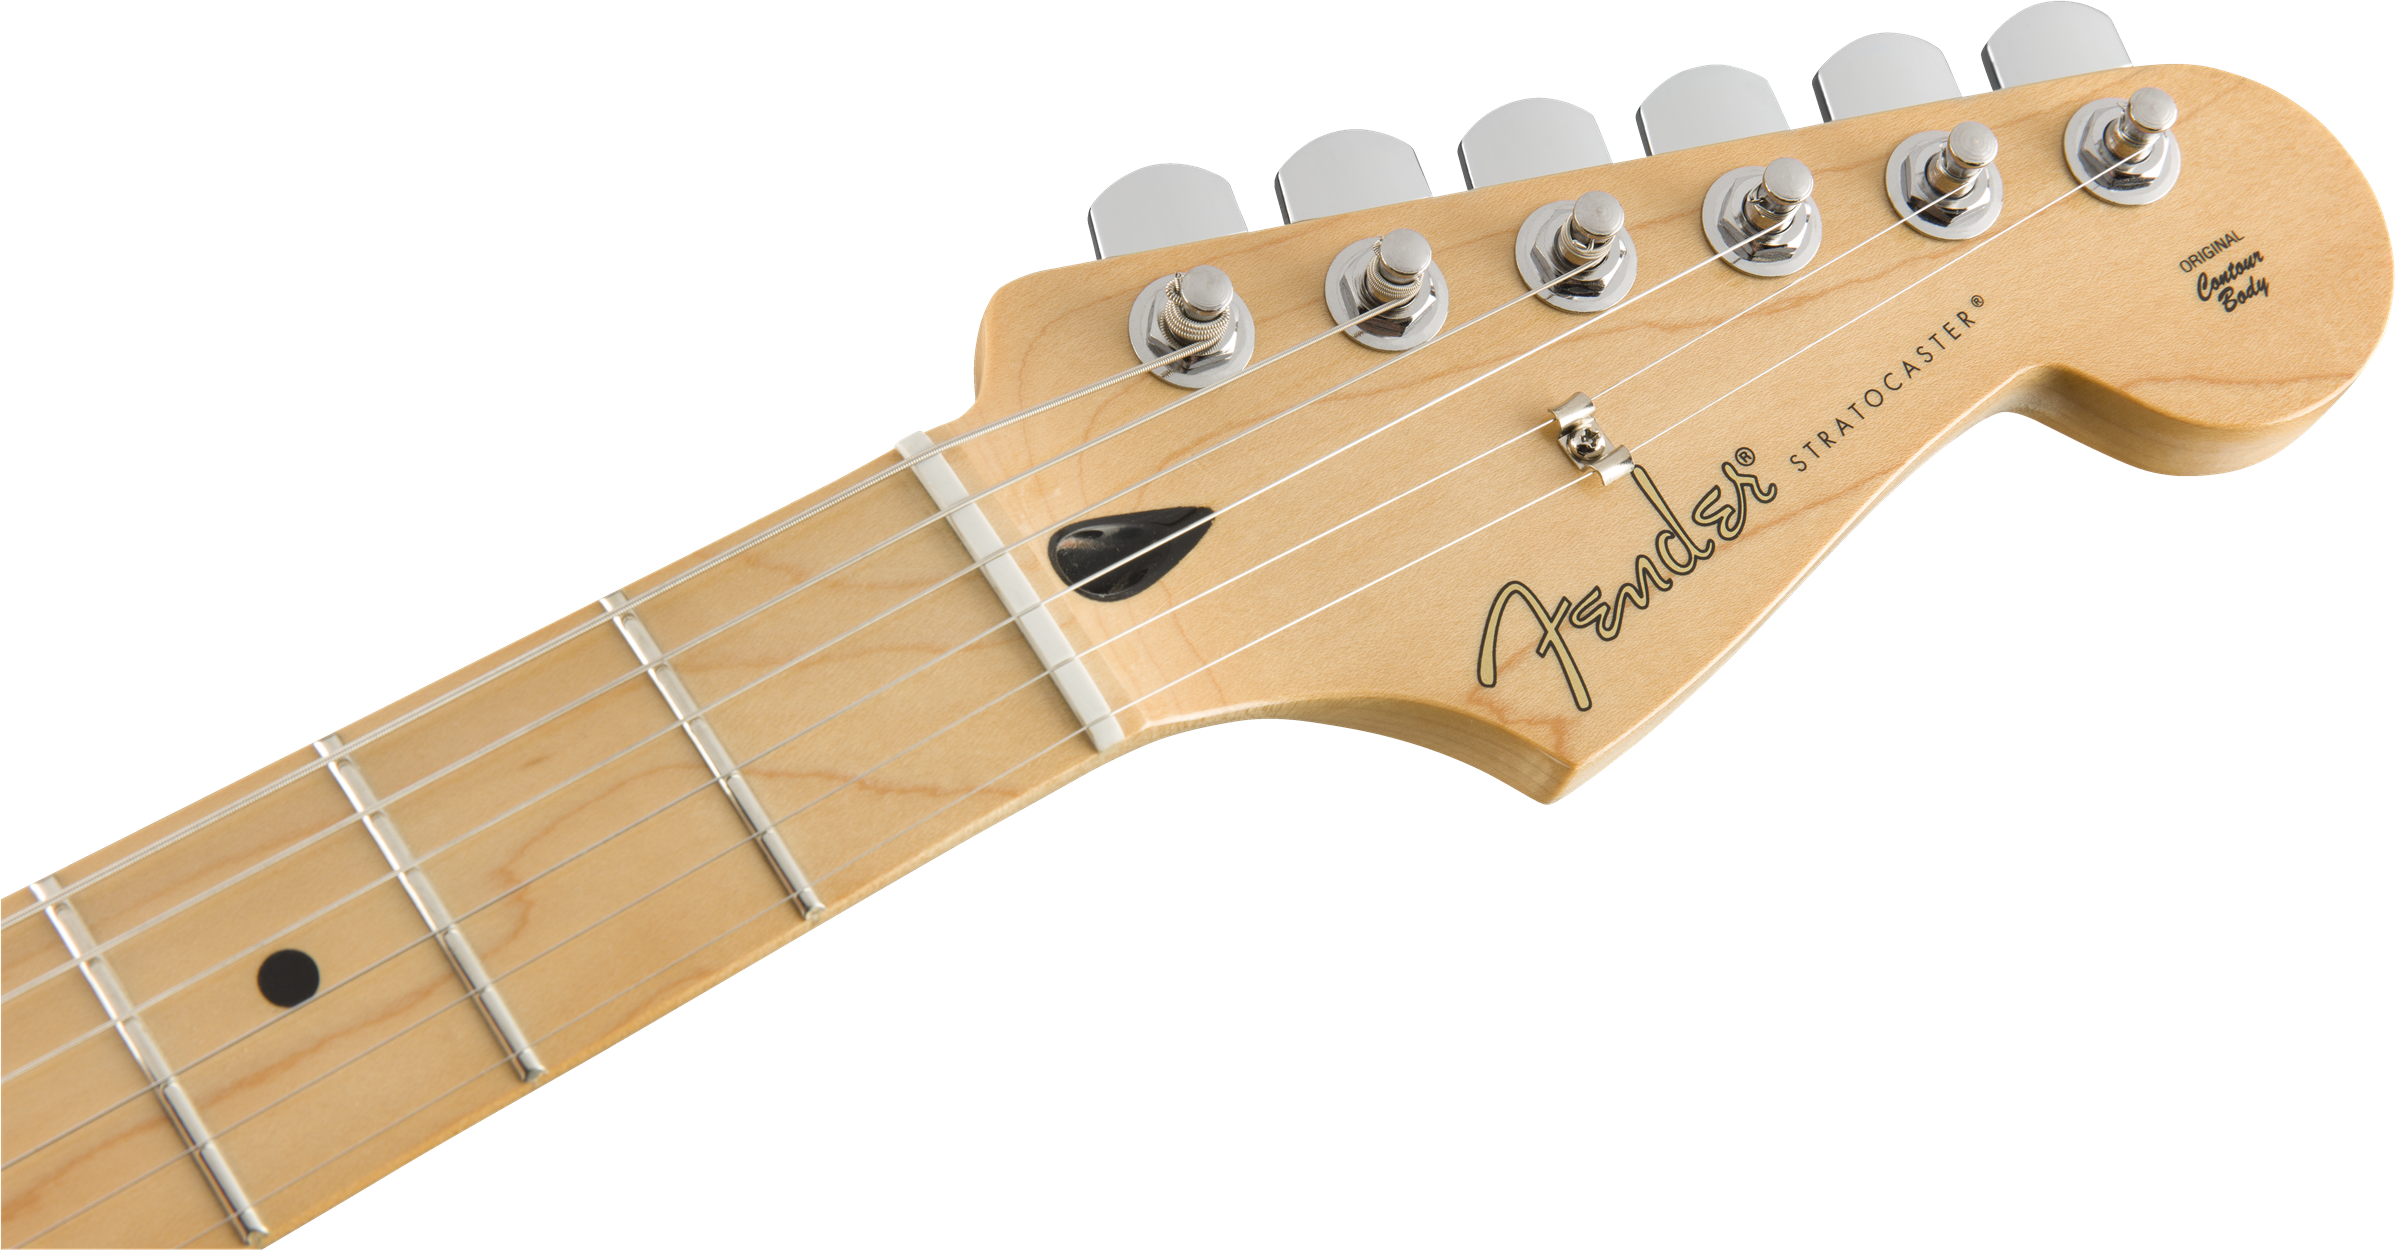 Fender Player Series Stratocaster (Black) - Electric Guitar 電結他